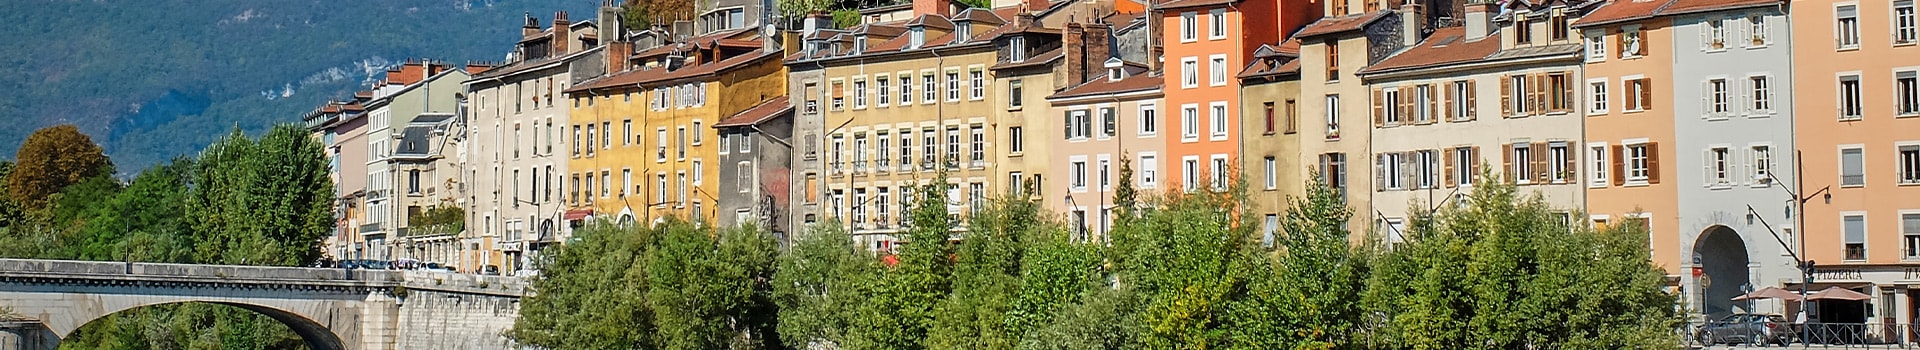 Biarritz - Grenoble